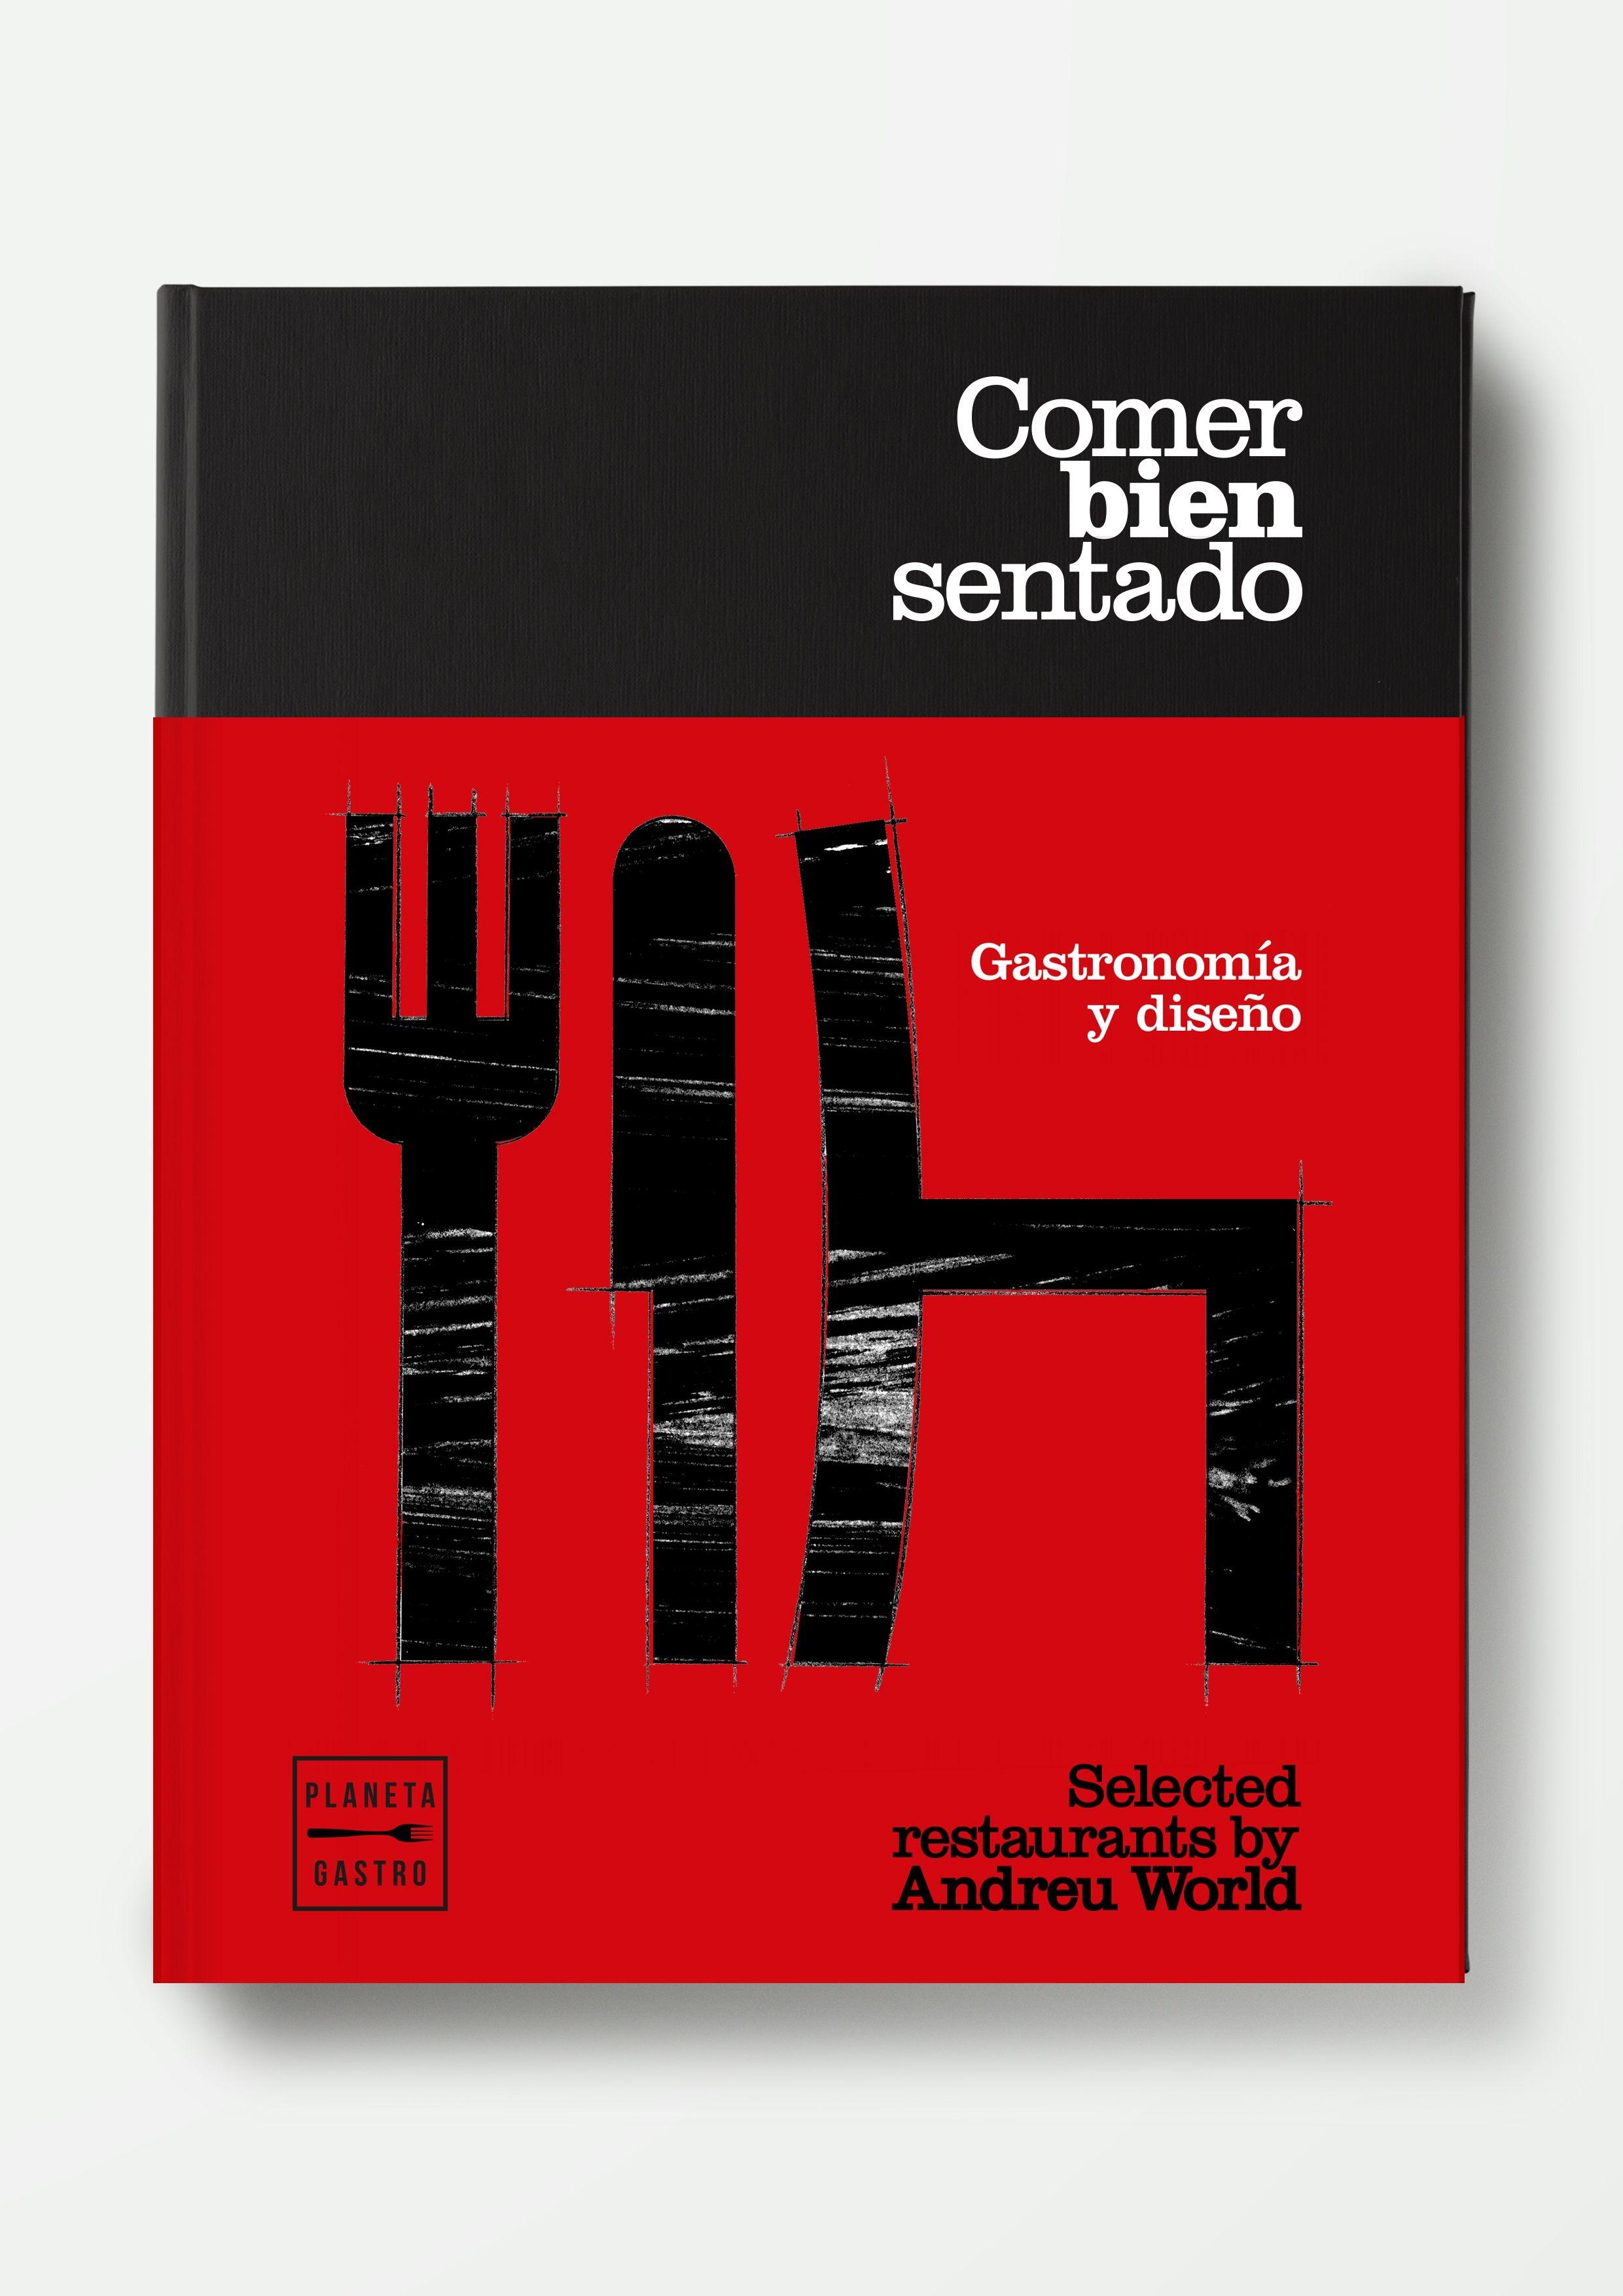 Comer bien sentado "Selected restaurants by Andreu World"